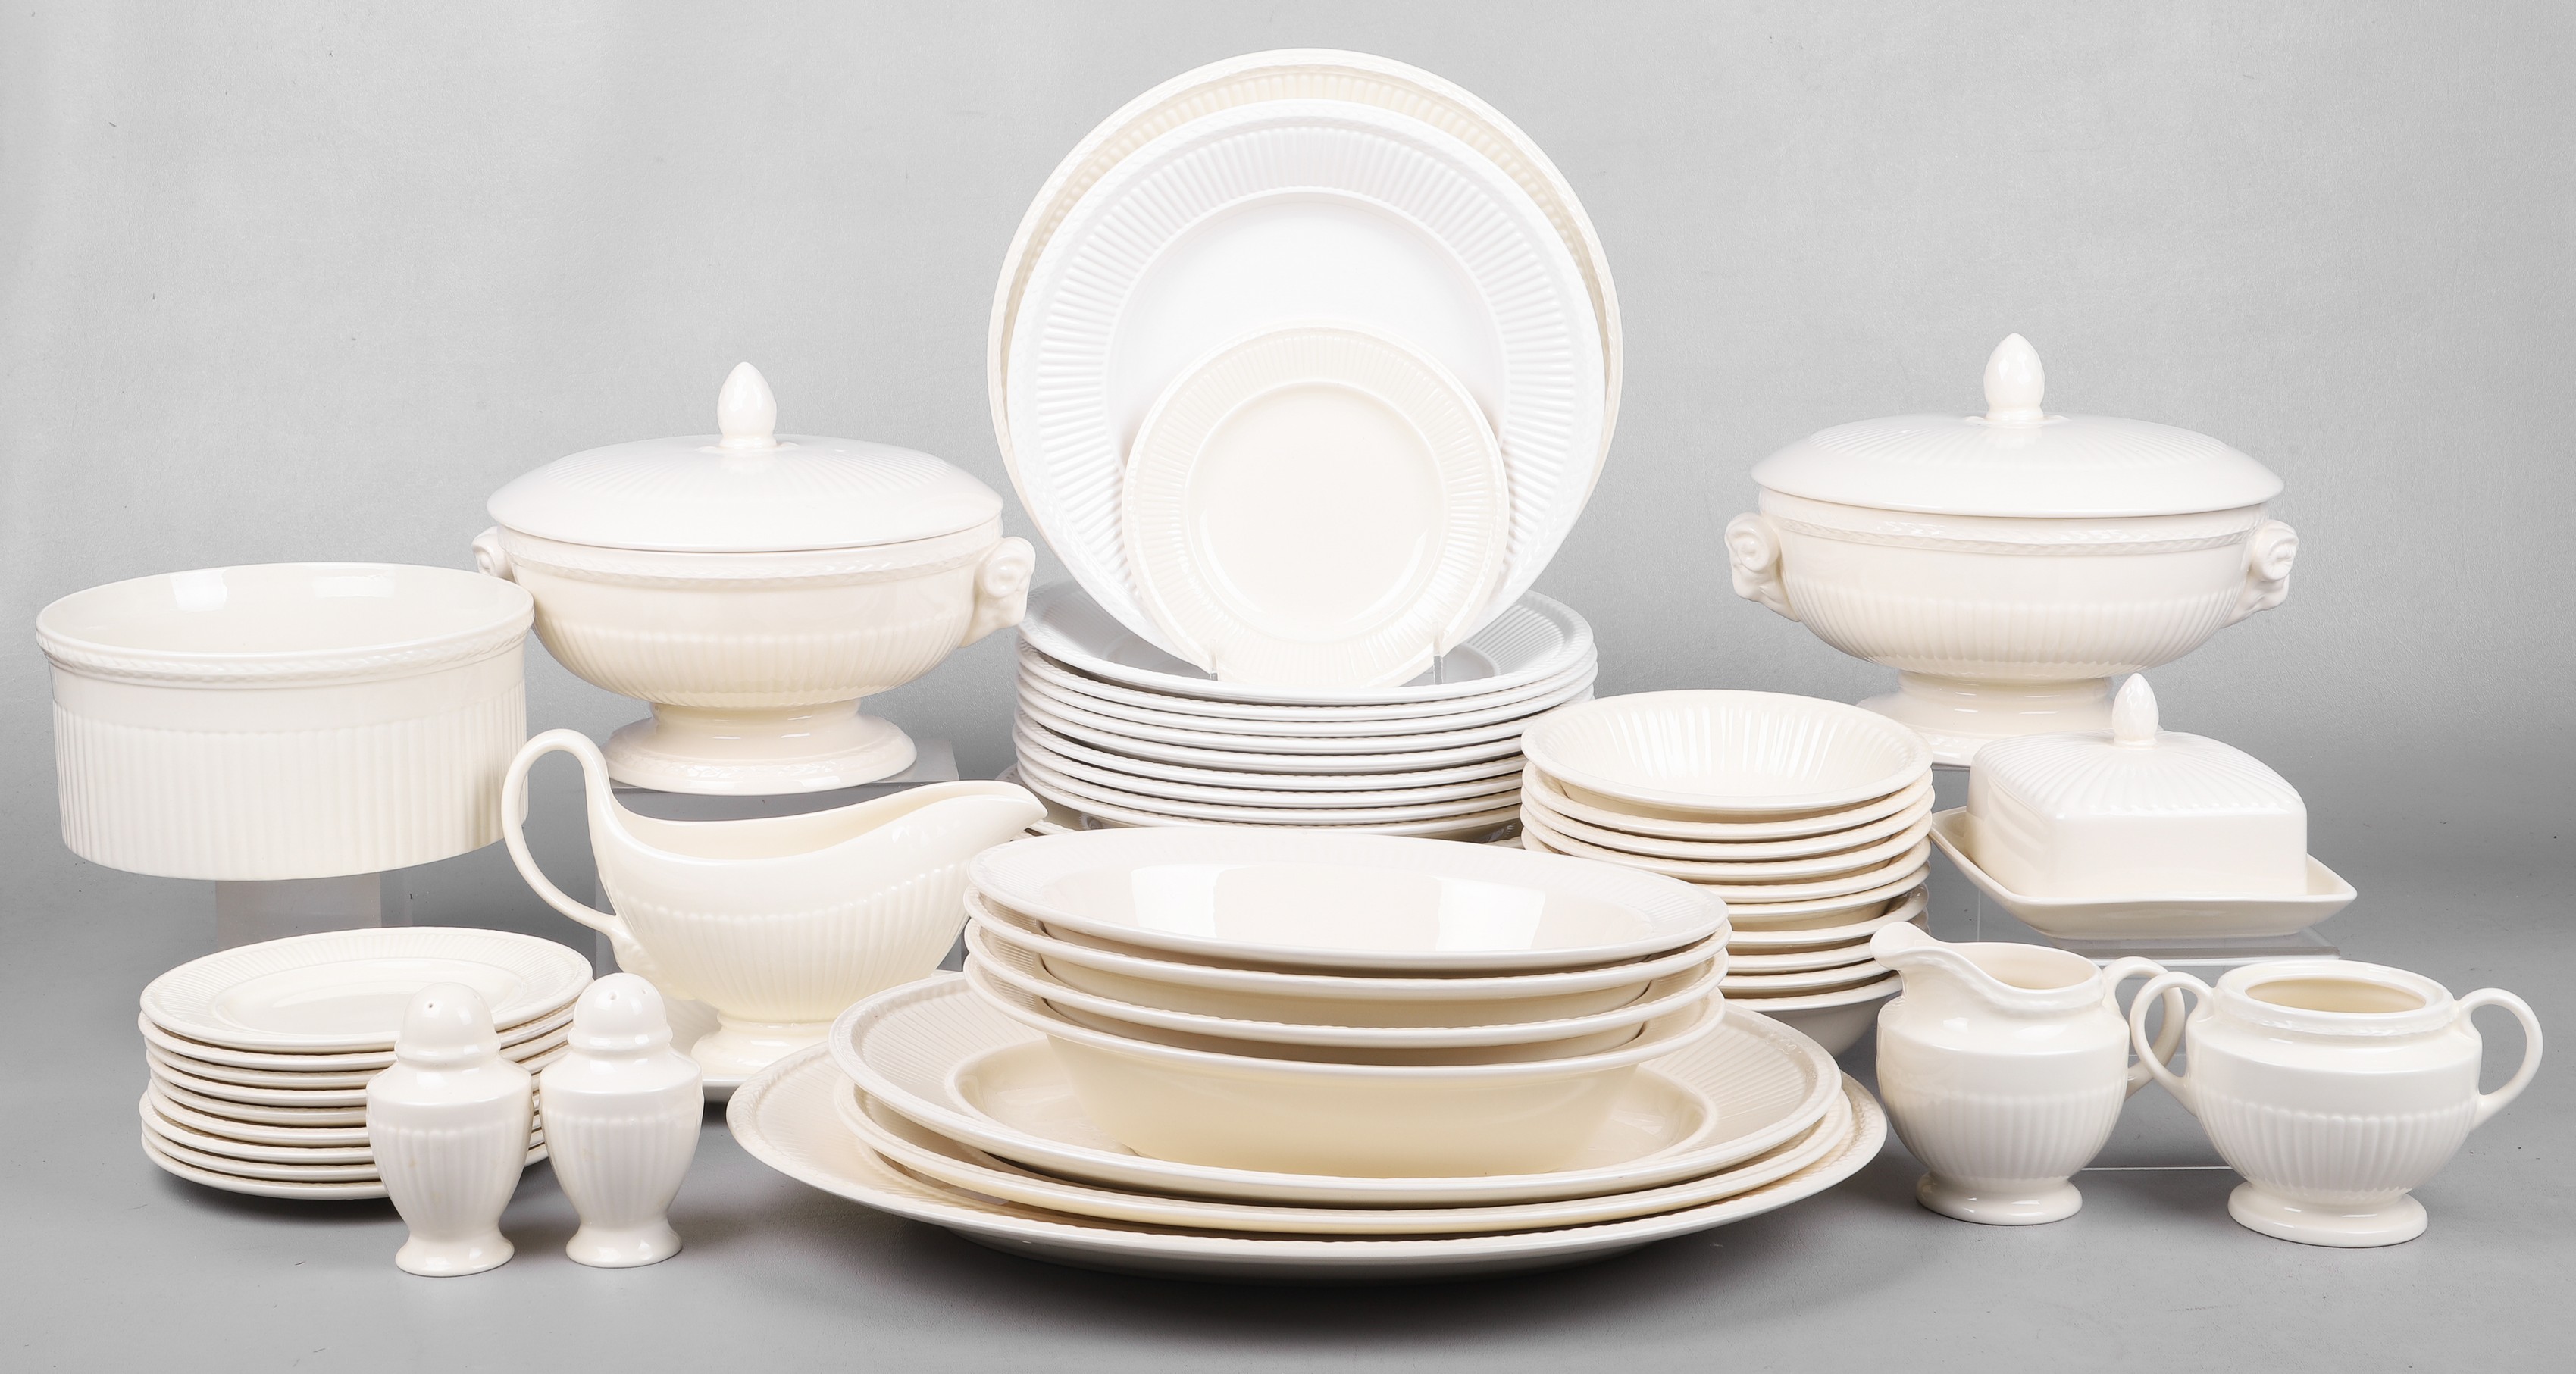  54 Pcs Wedgwood porcelain dinnerware  27a5df